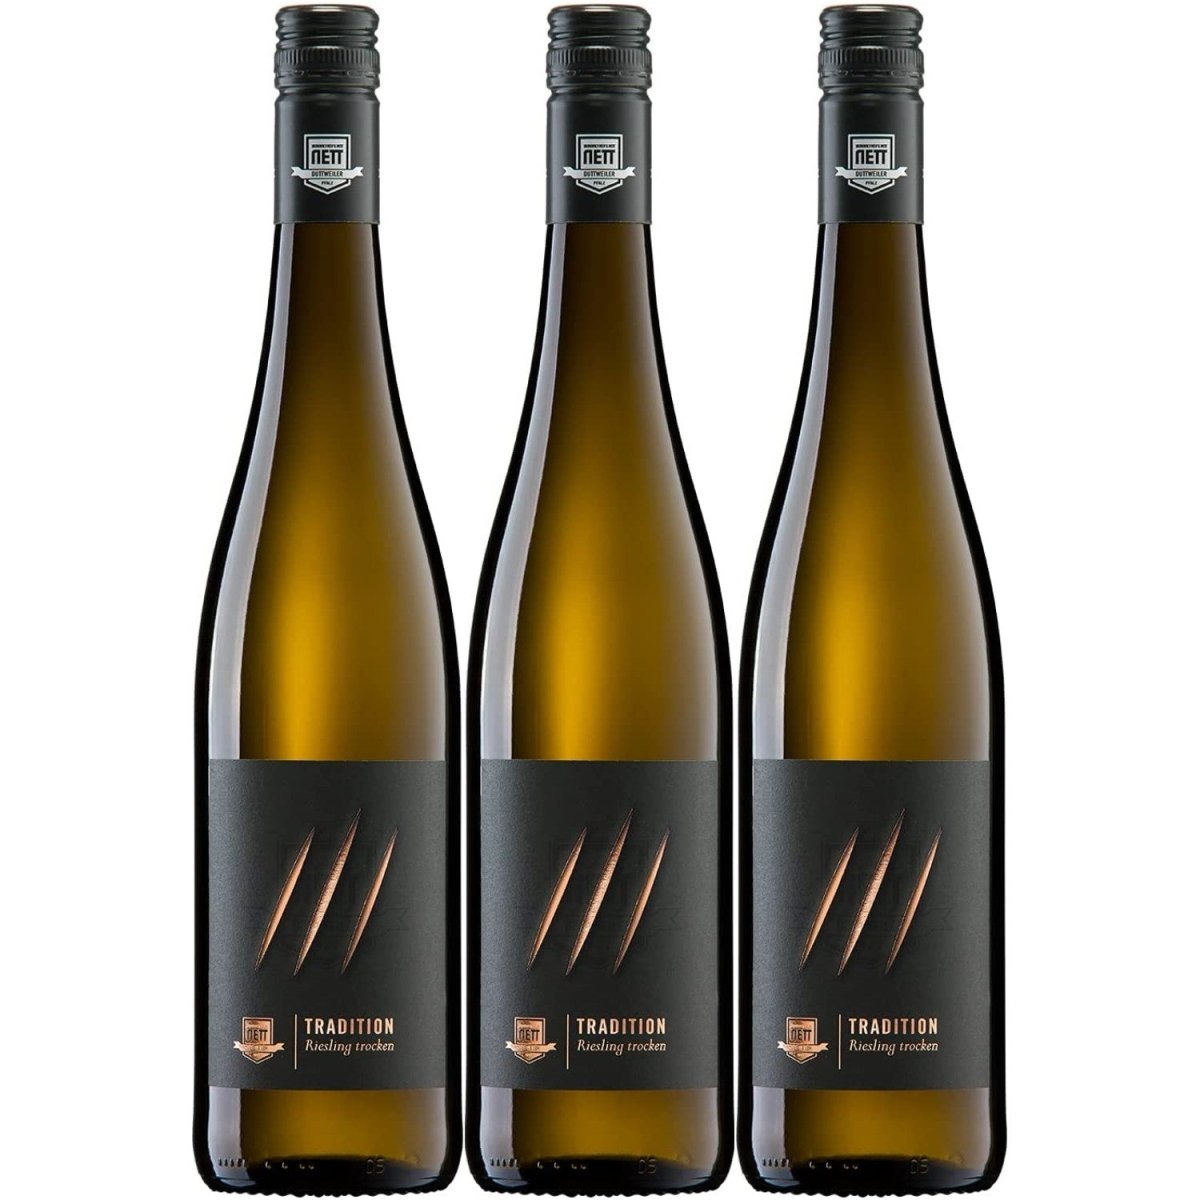 Bergdolt-Reif & Nett Tradition Riesling Weißwein Wein trocken Pfalz (3 x 0,75l) - Versanel -